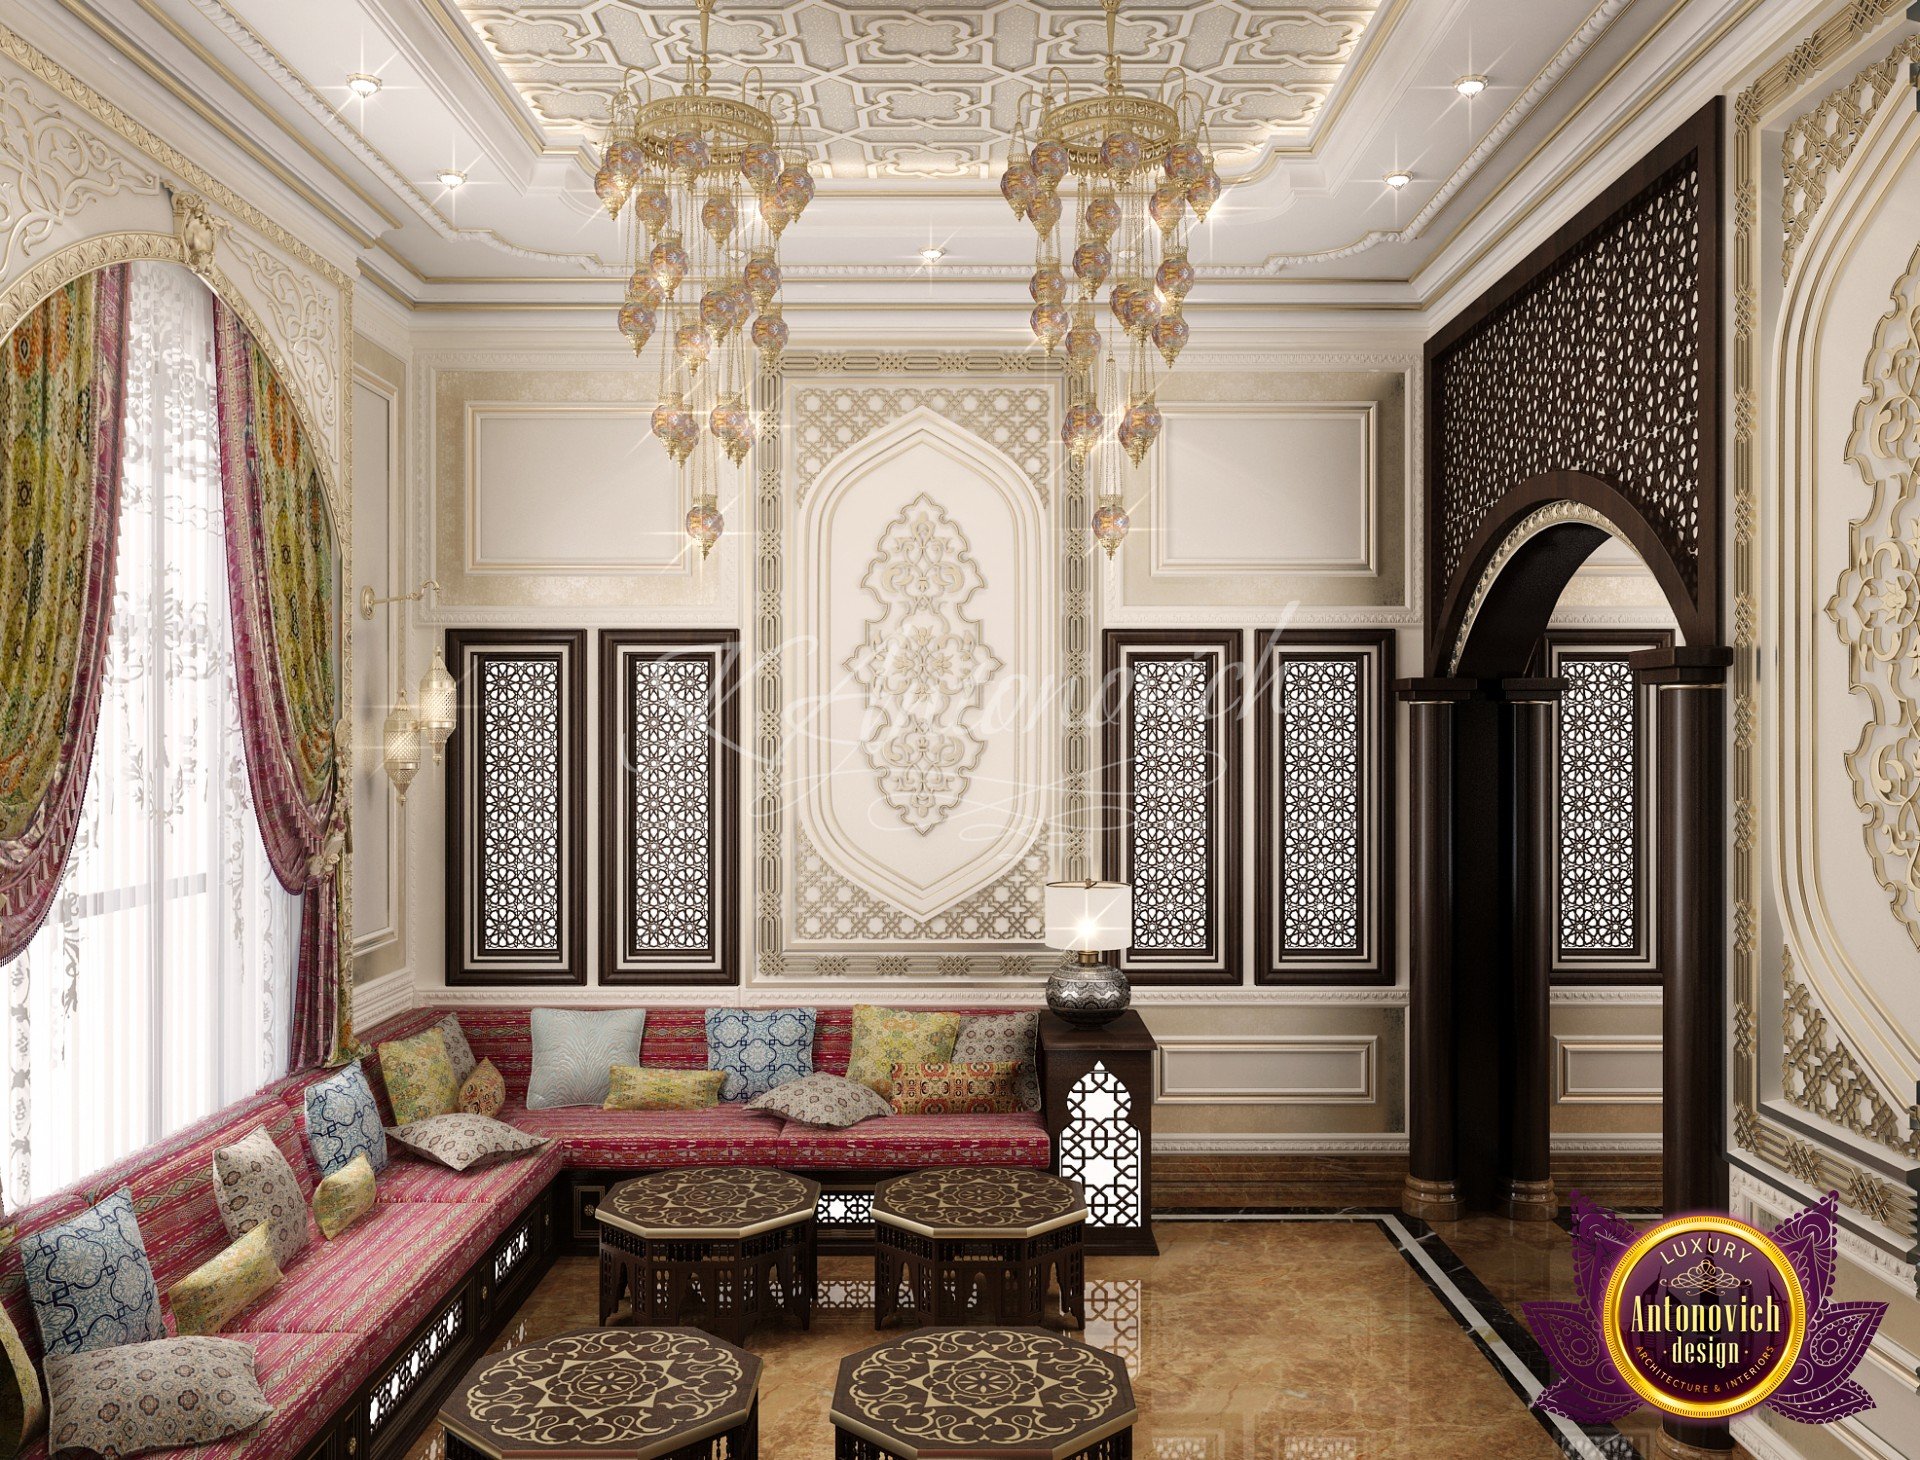 Arabic Style Interior Design Arabic Modern Interior On Behance The Art Of Images